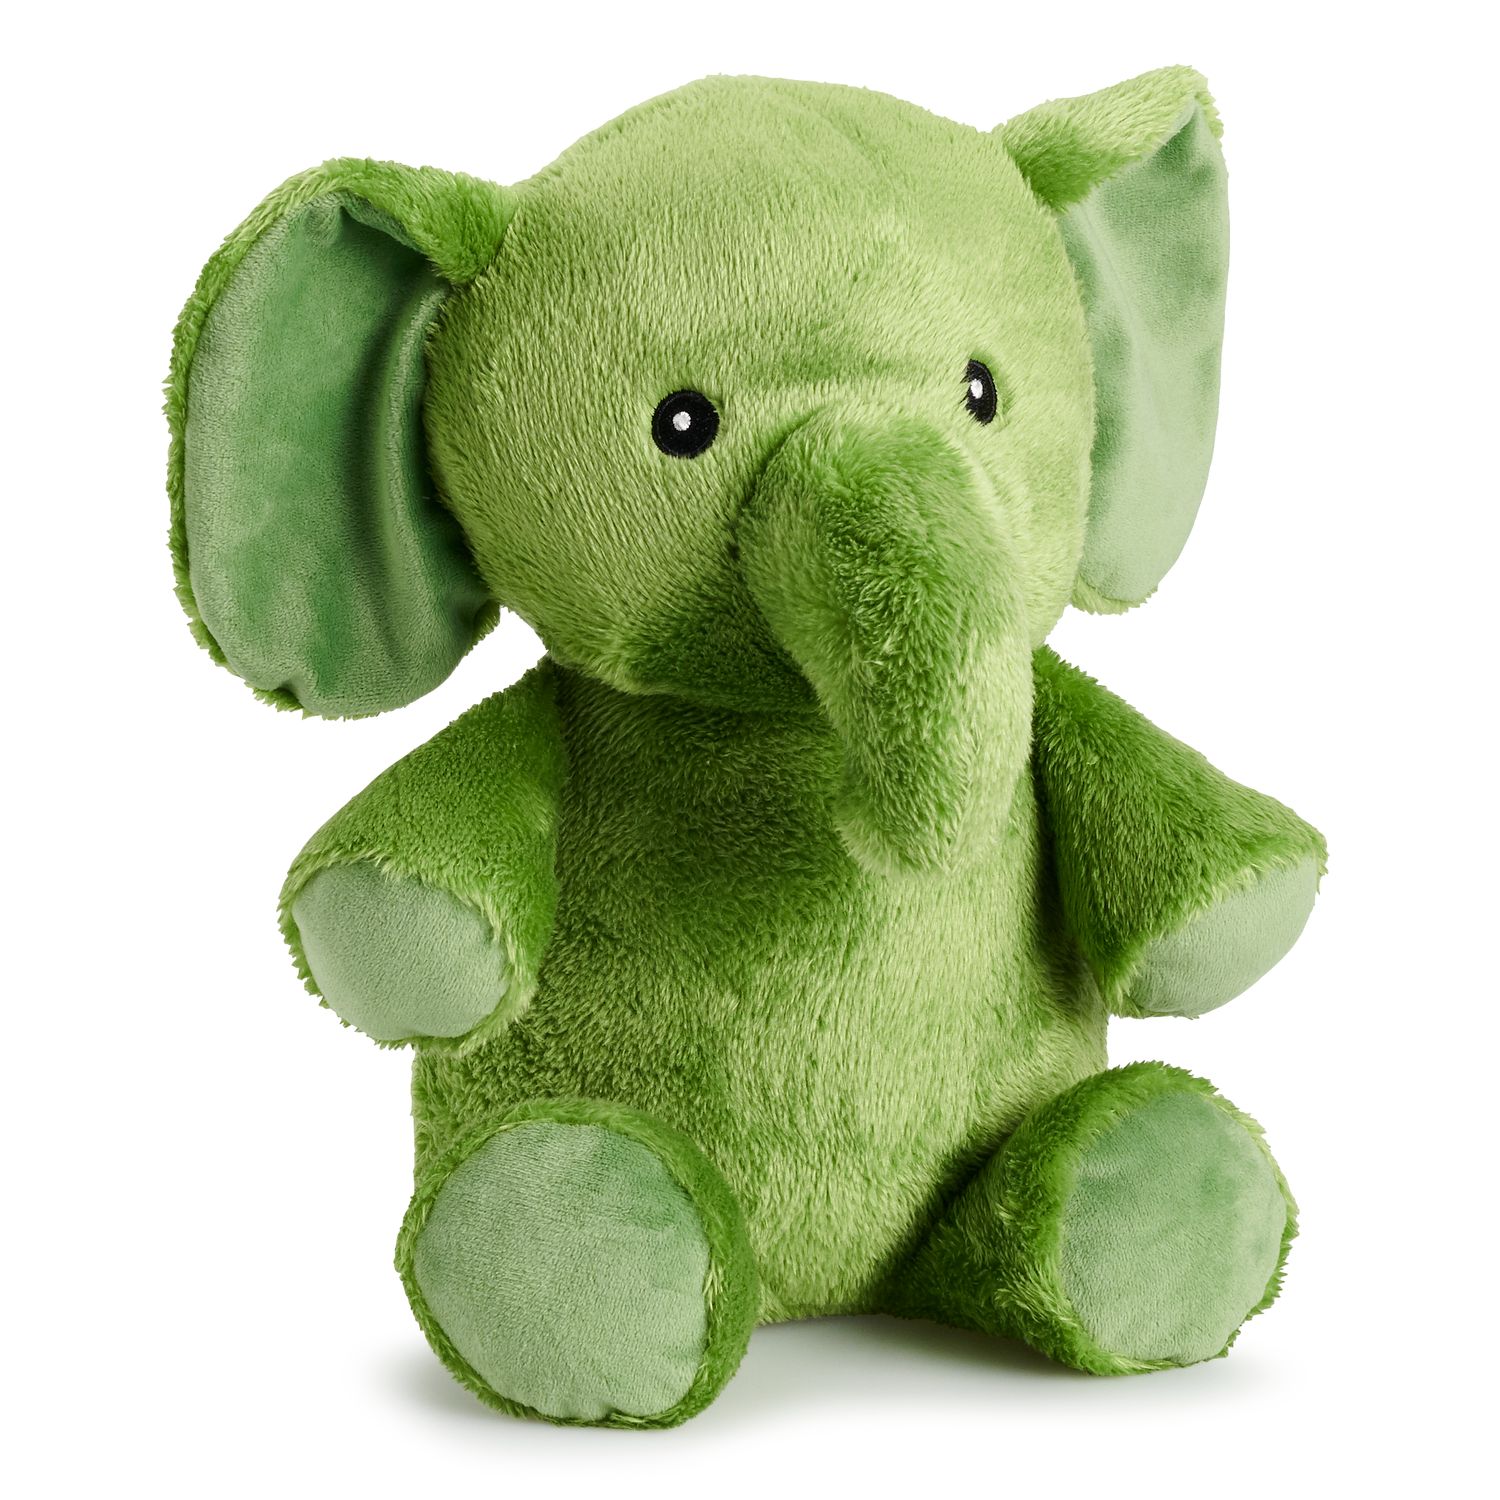 green stuffed elephant